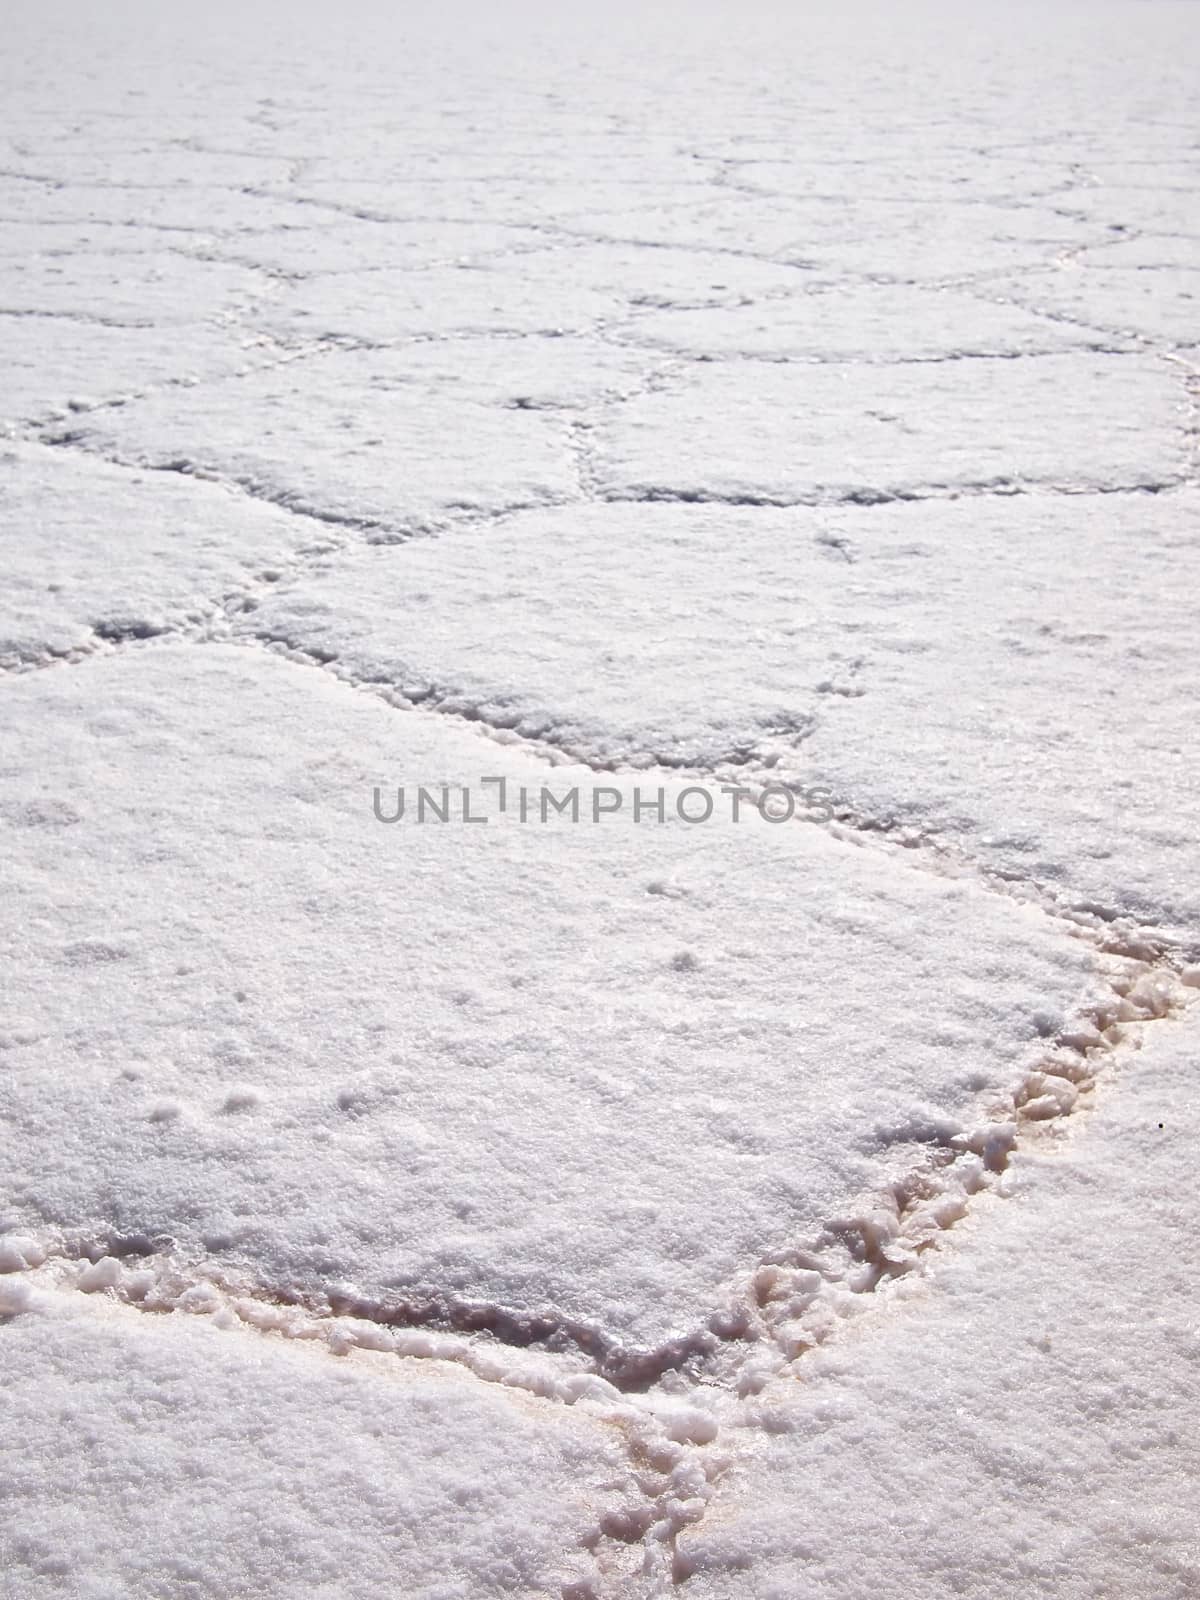 Abstract pattern in the salt of the Salar de Uyuni salt lake near Uyuni, Bolivia.